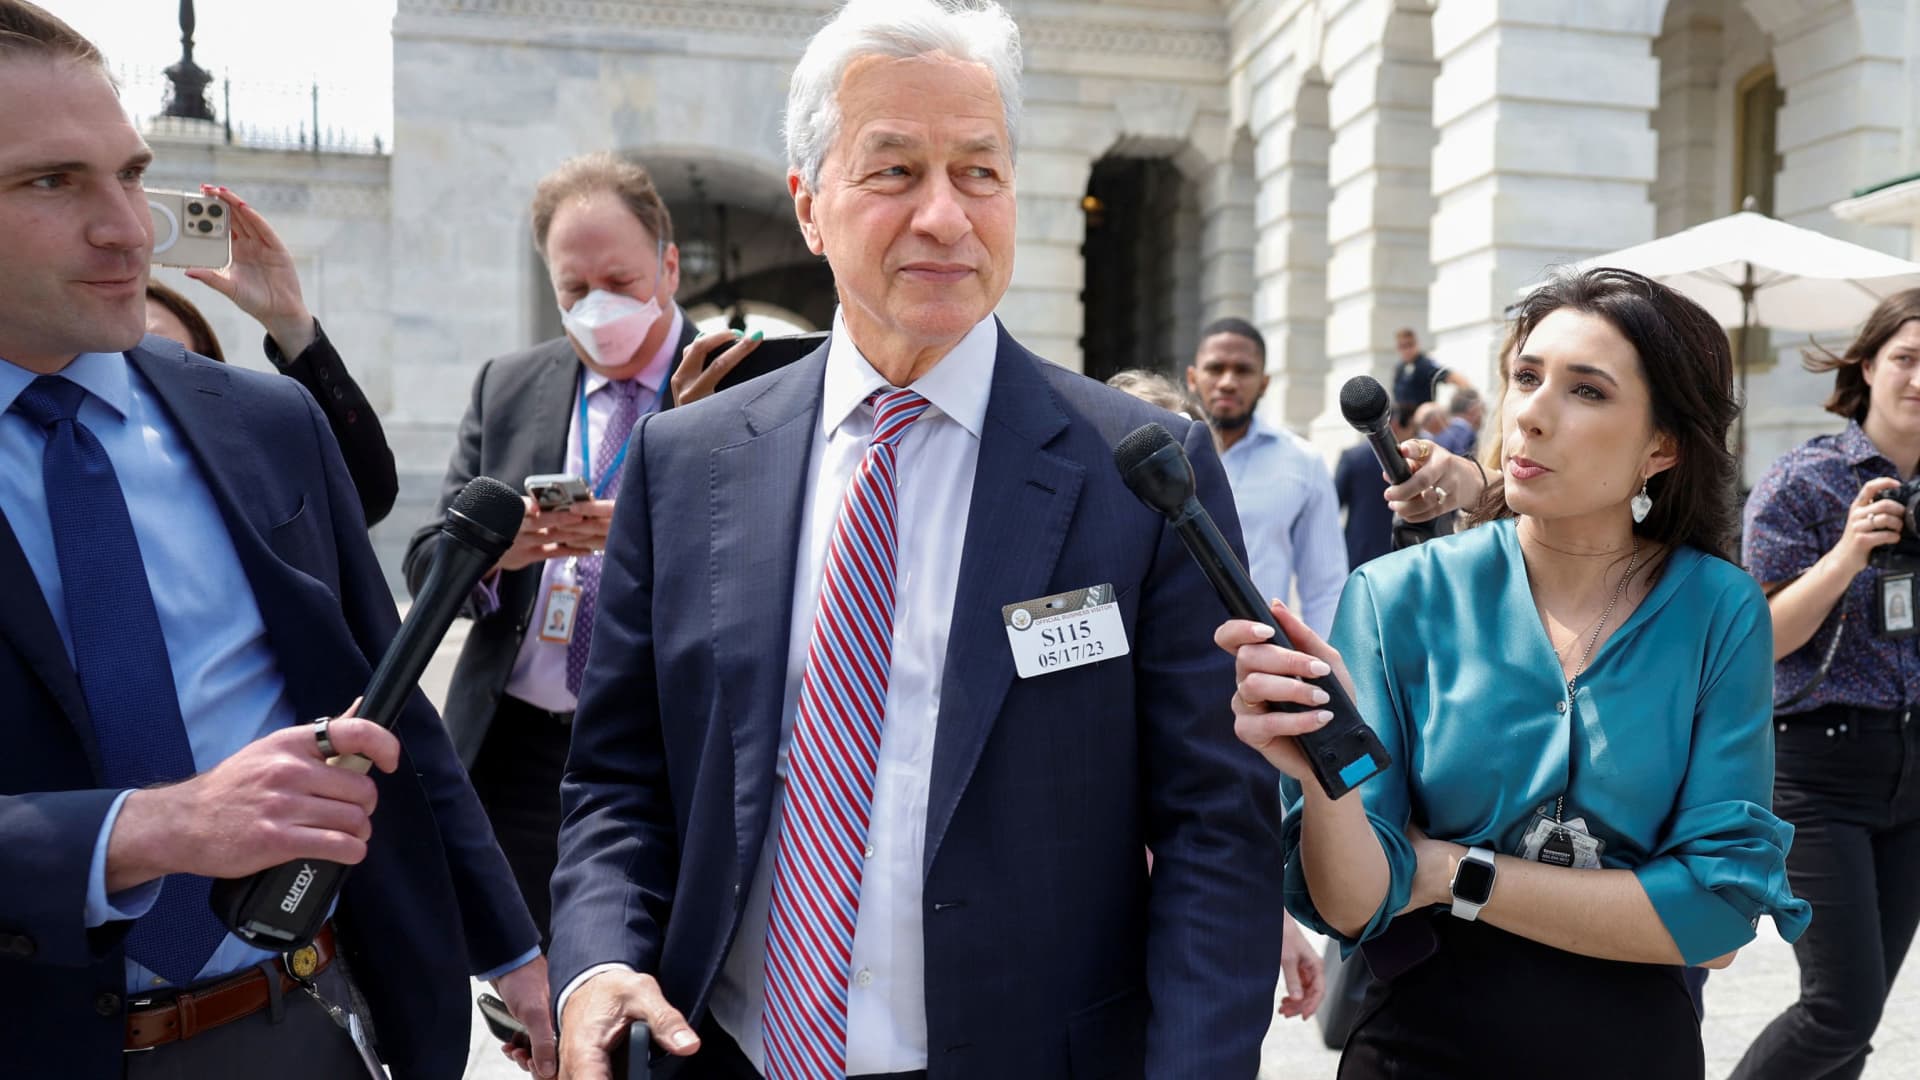 JPMorgan CEO Jamie Dimon faces deposition in Jeffrey Epstein lawsuits